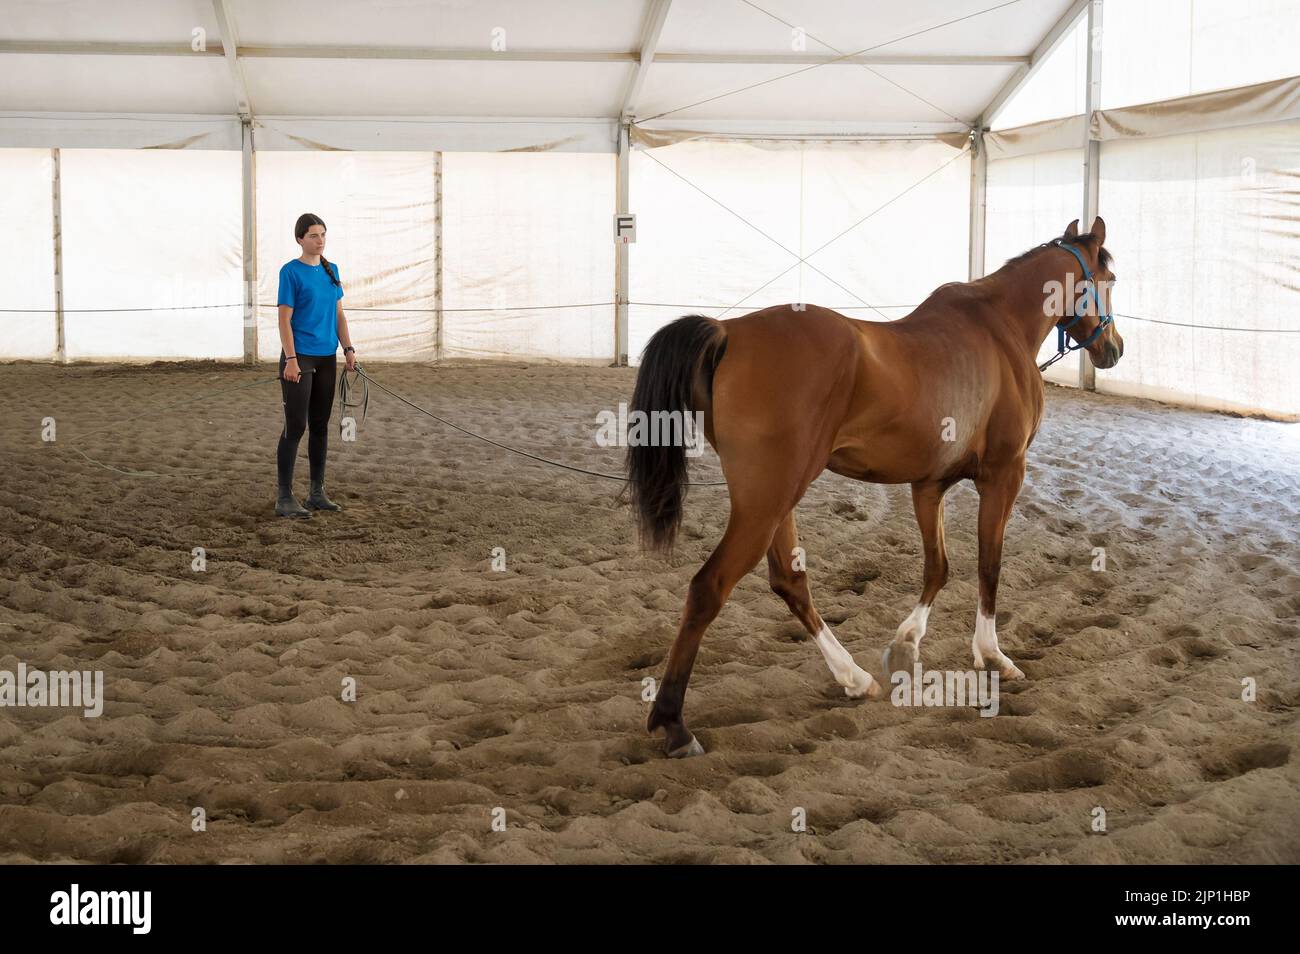 horse, riding arena, horse training, horses, riding arenas, horse lunge Stock Photo